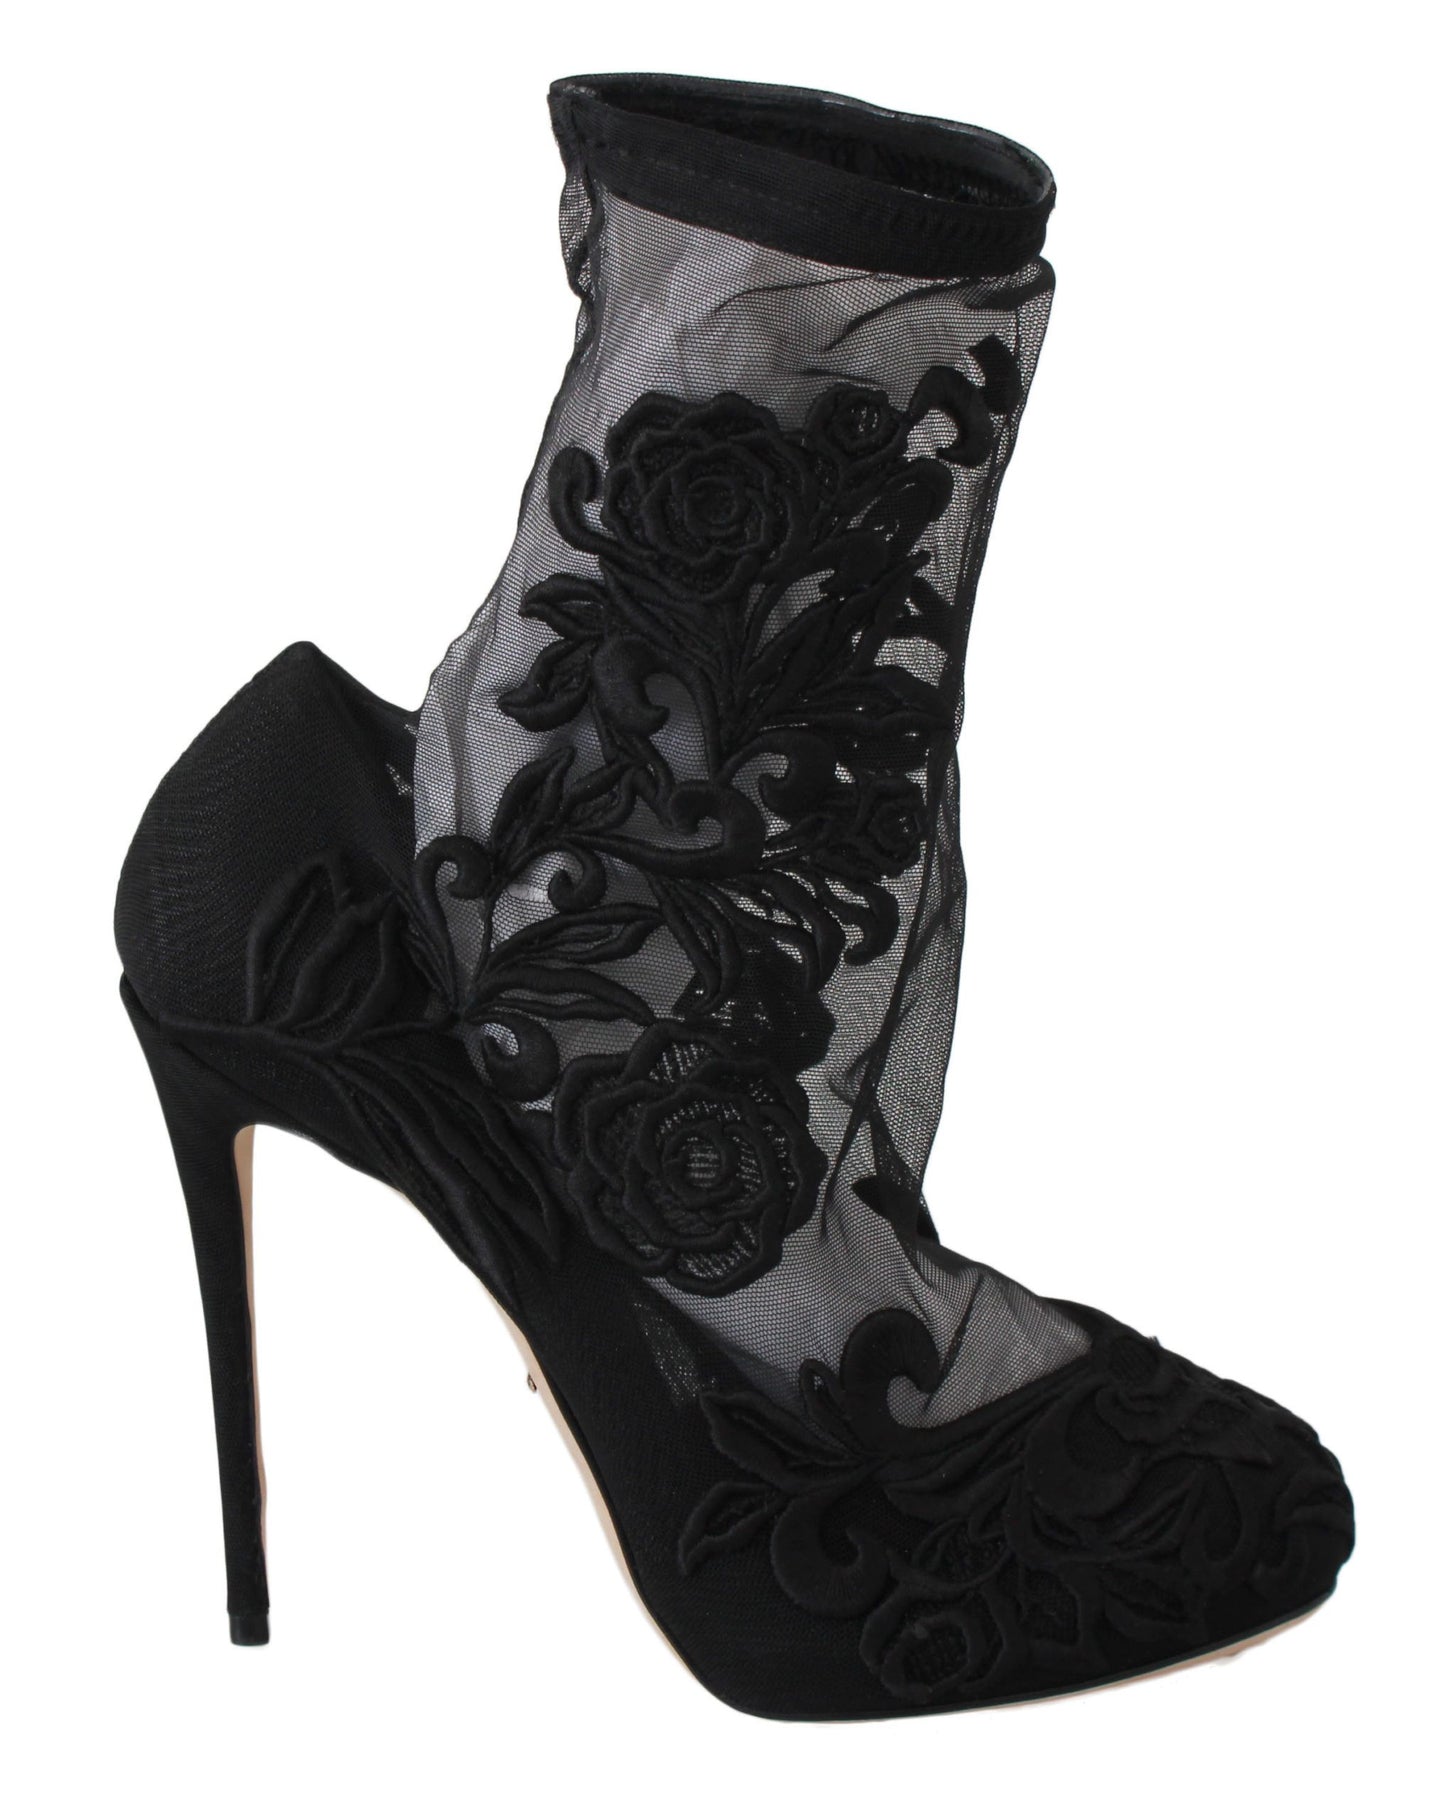 Black Roses Stilettos Booties Socks Shoes